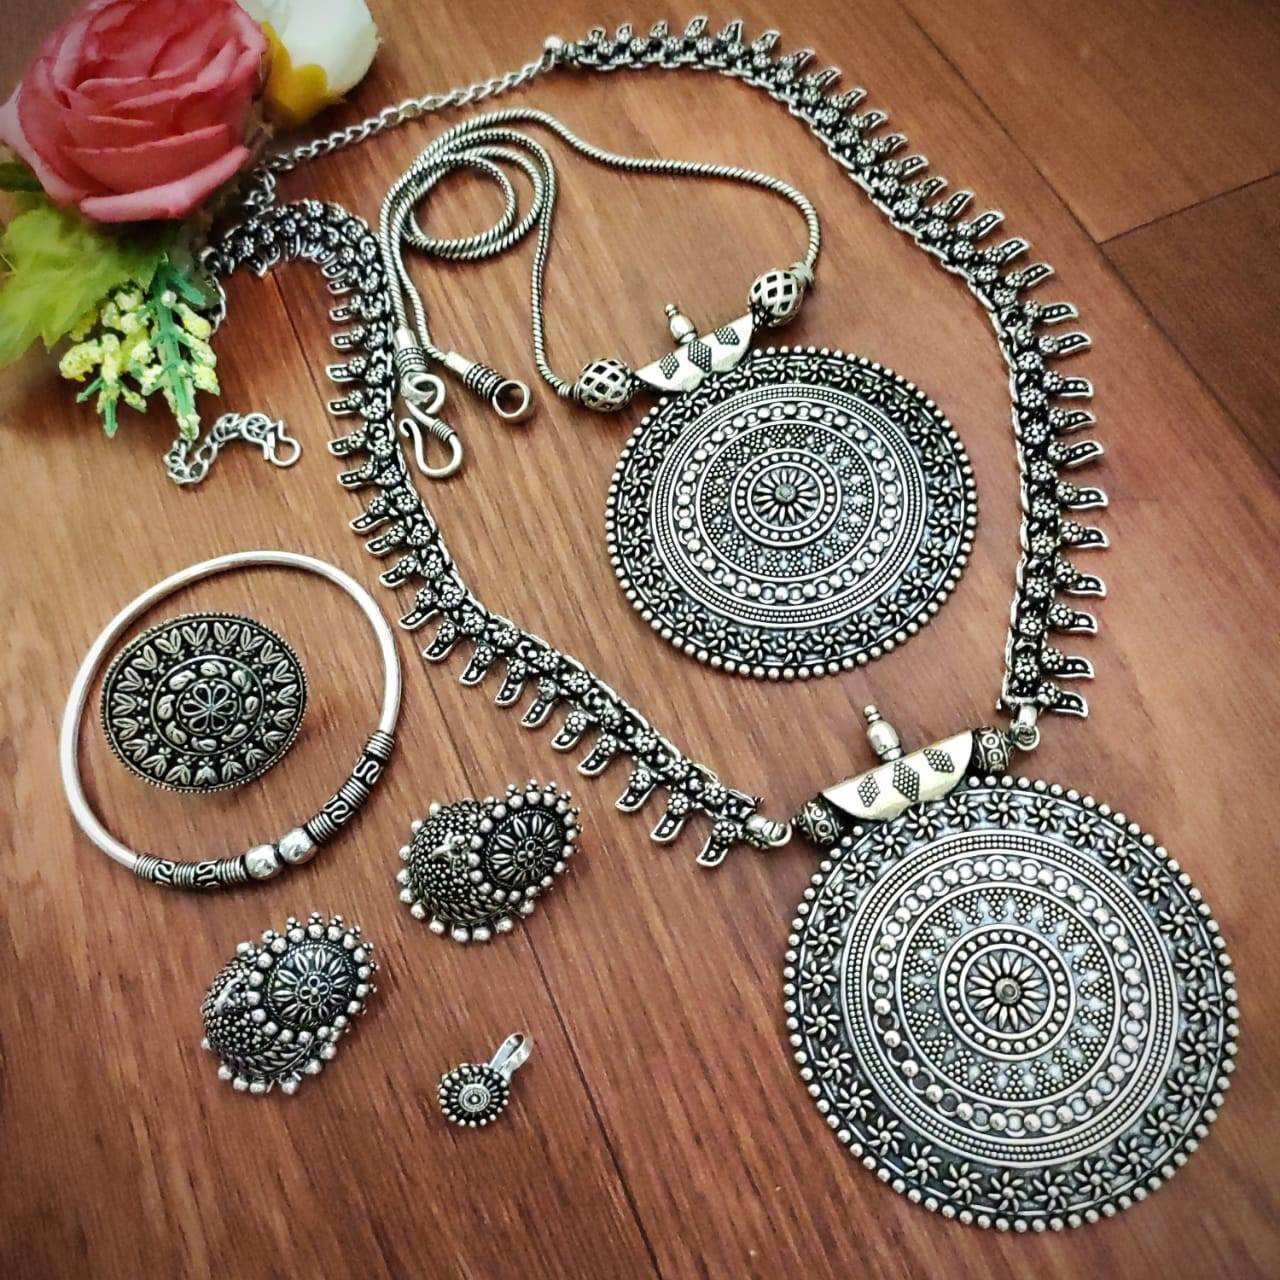 Long Oxidised necklace set of 6 with jhumki/ Indian statement necklace tribal jewelry oxidised handmade Bollywood celebrity oxidized